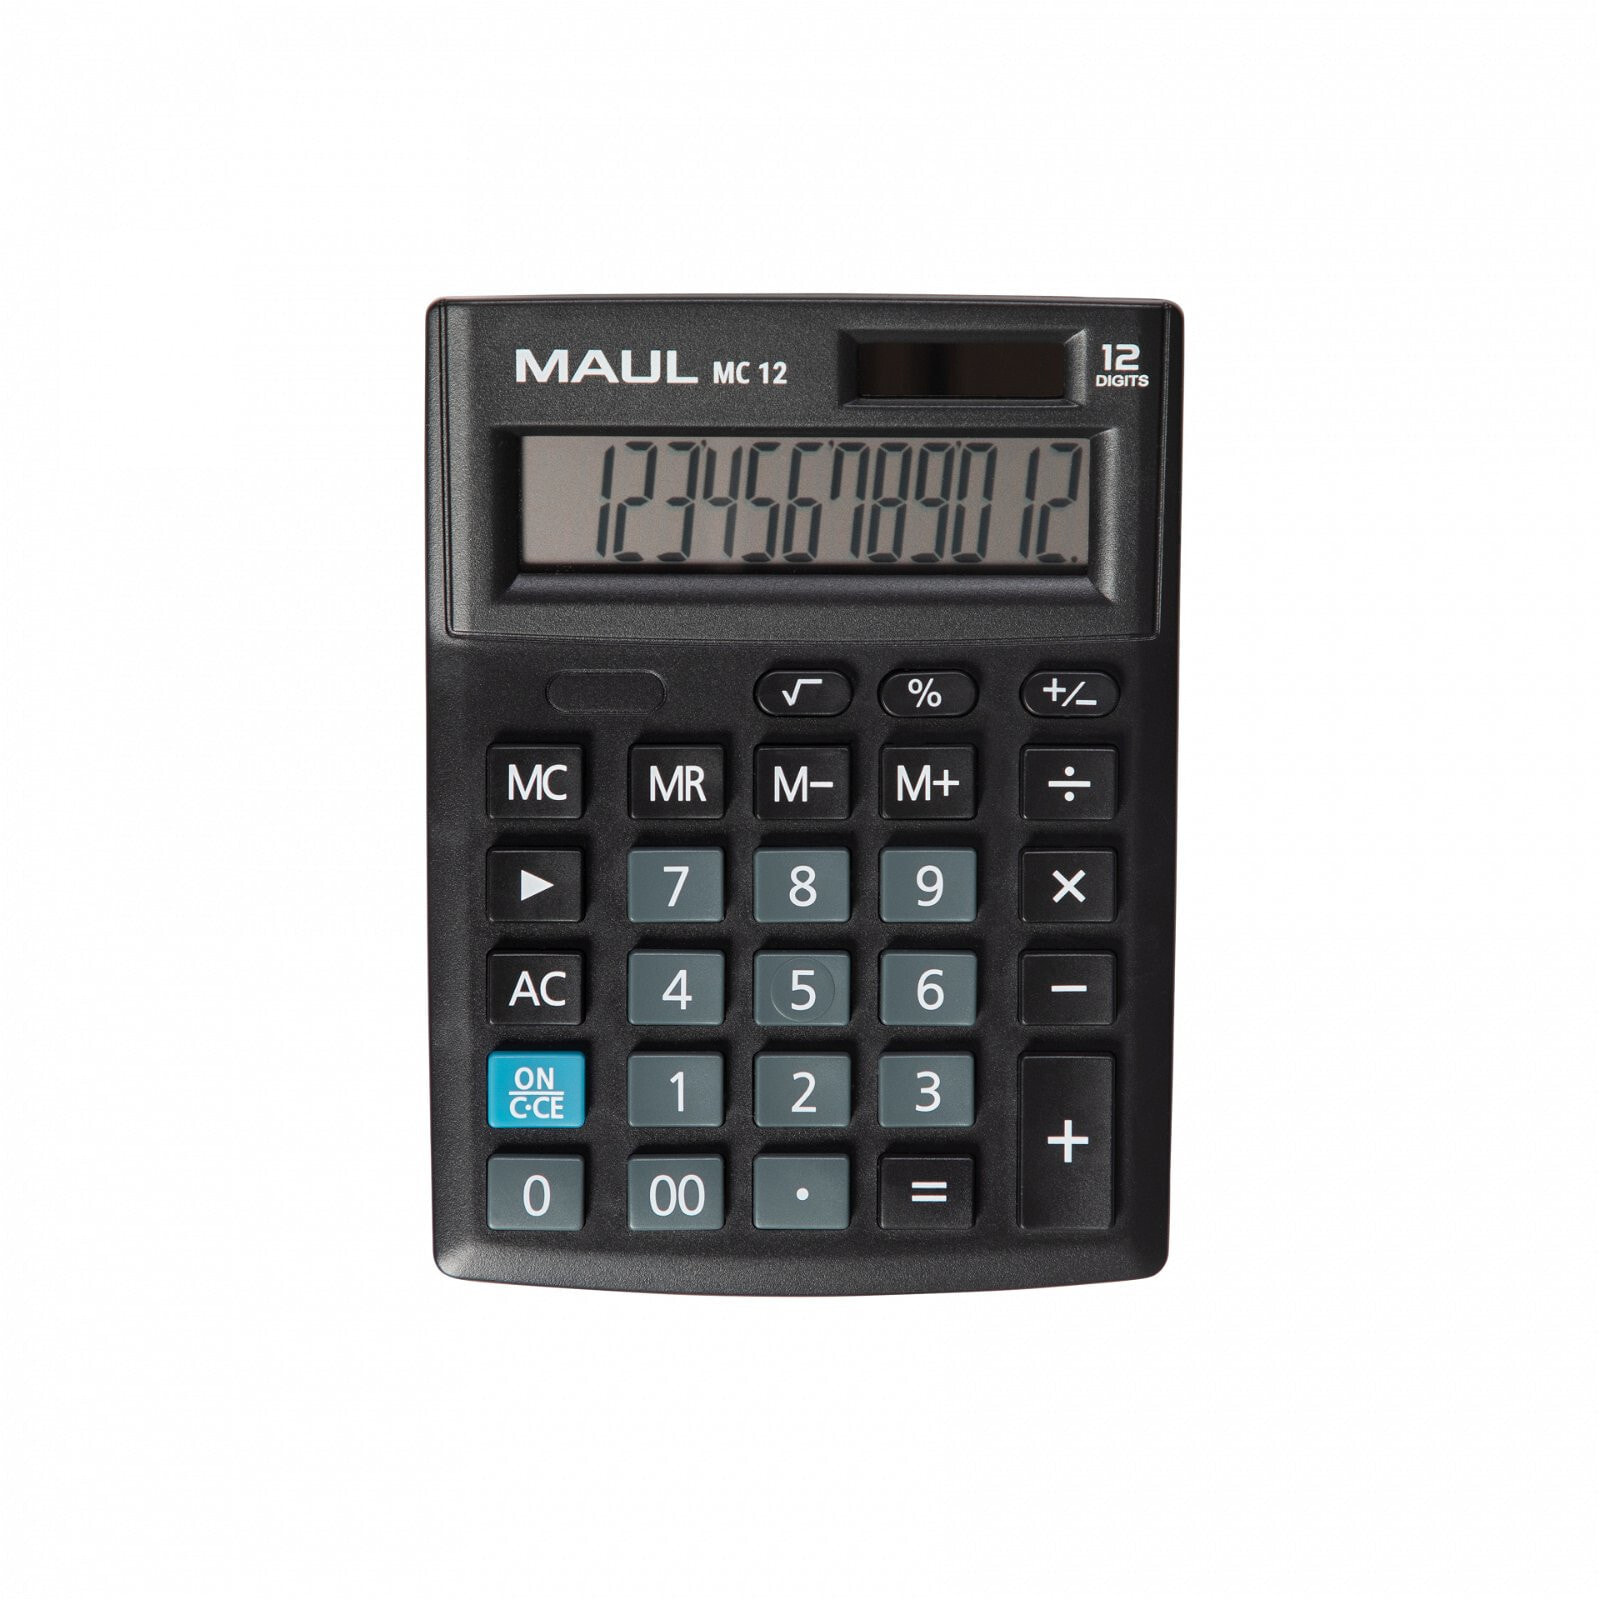 MAUL MC 12 - Pocket - Display - 12 digits - 1 lines - Battery - Black